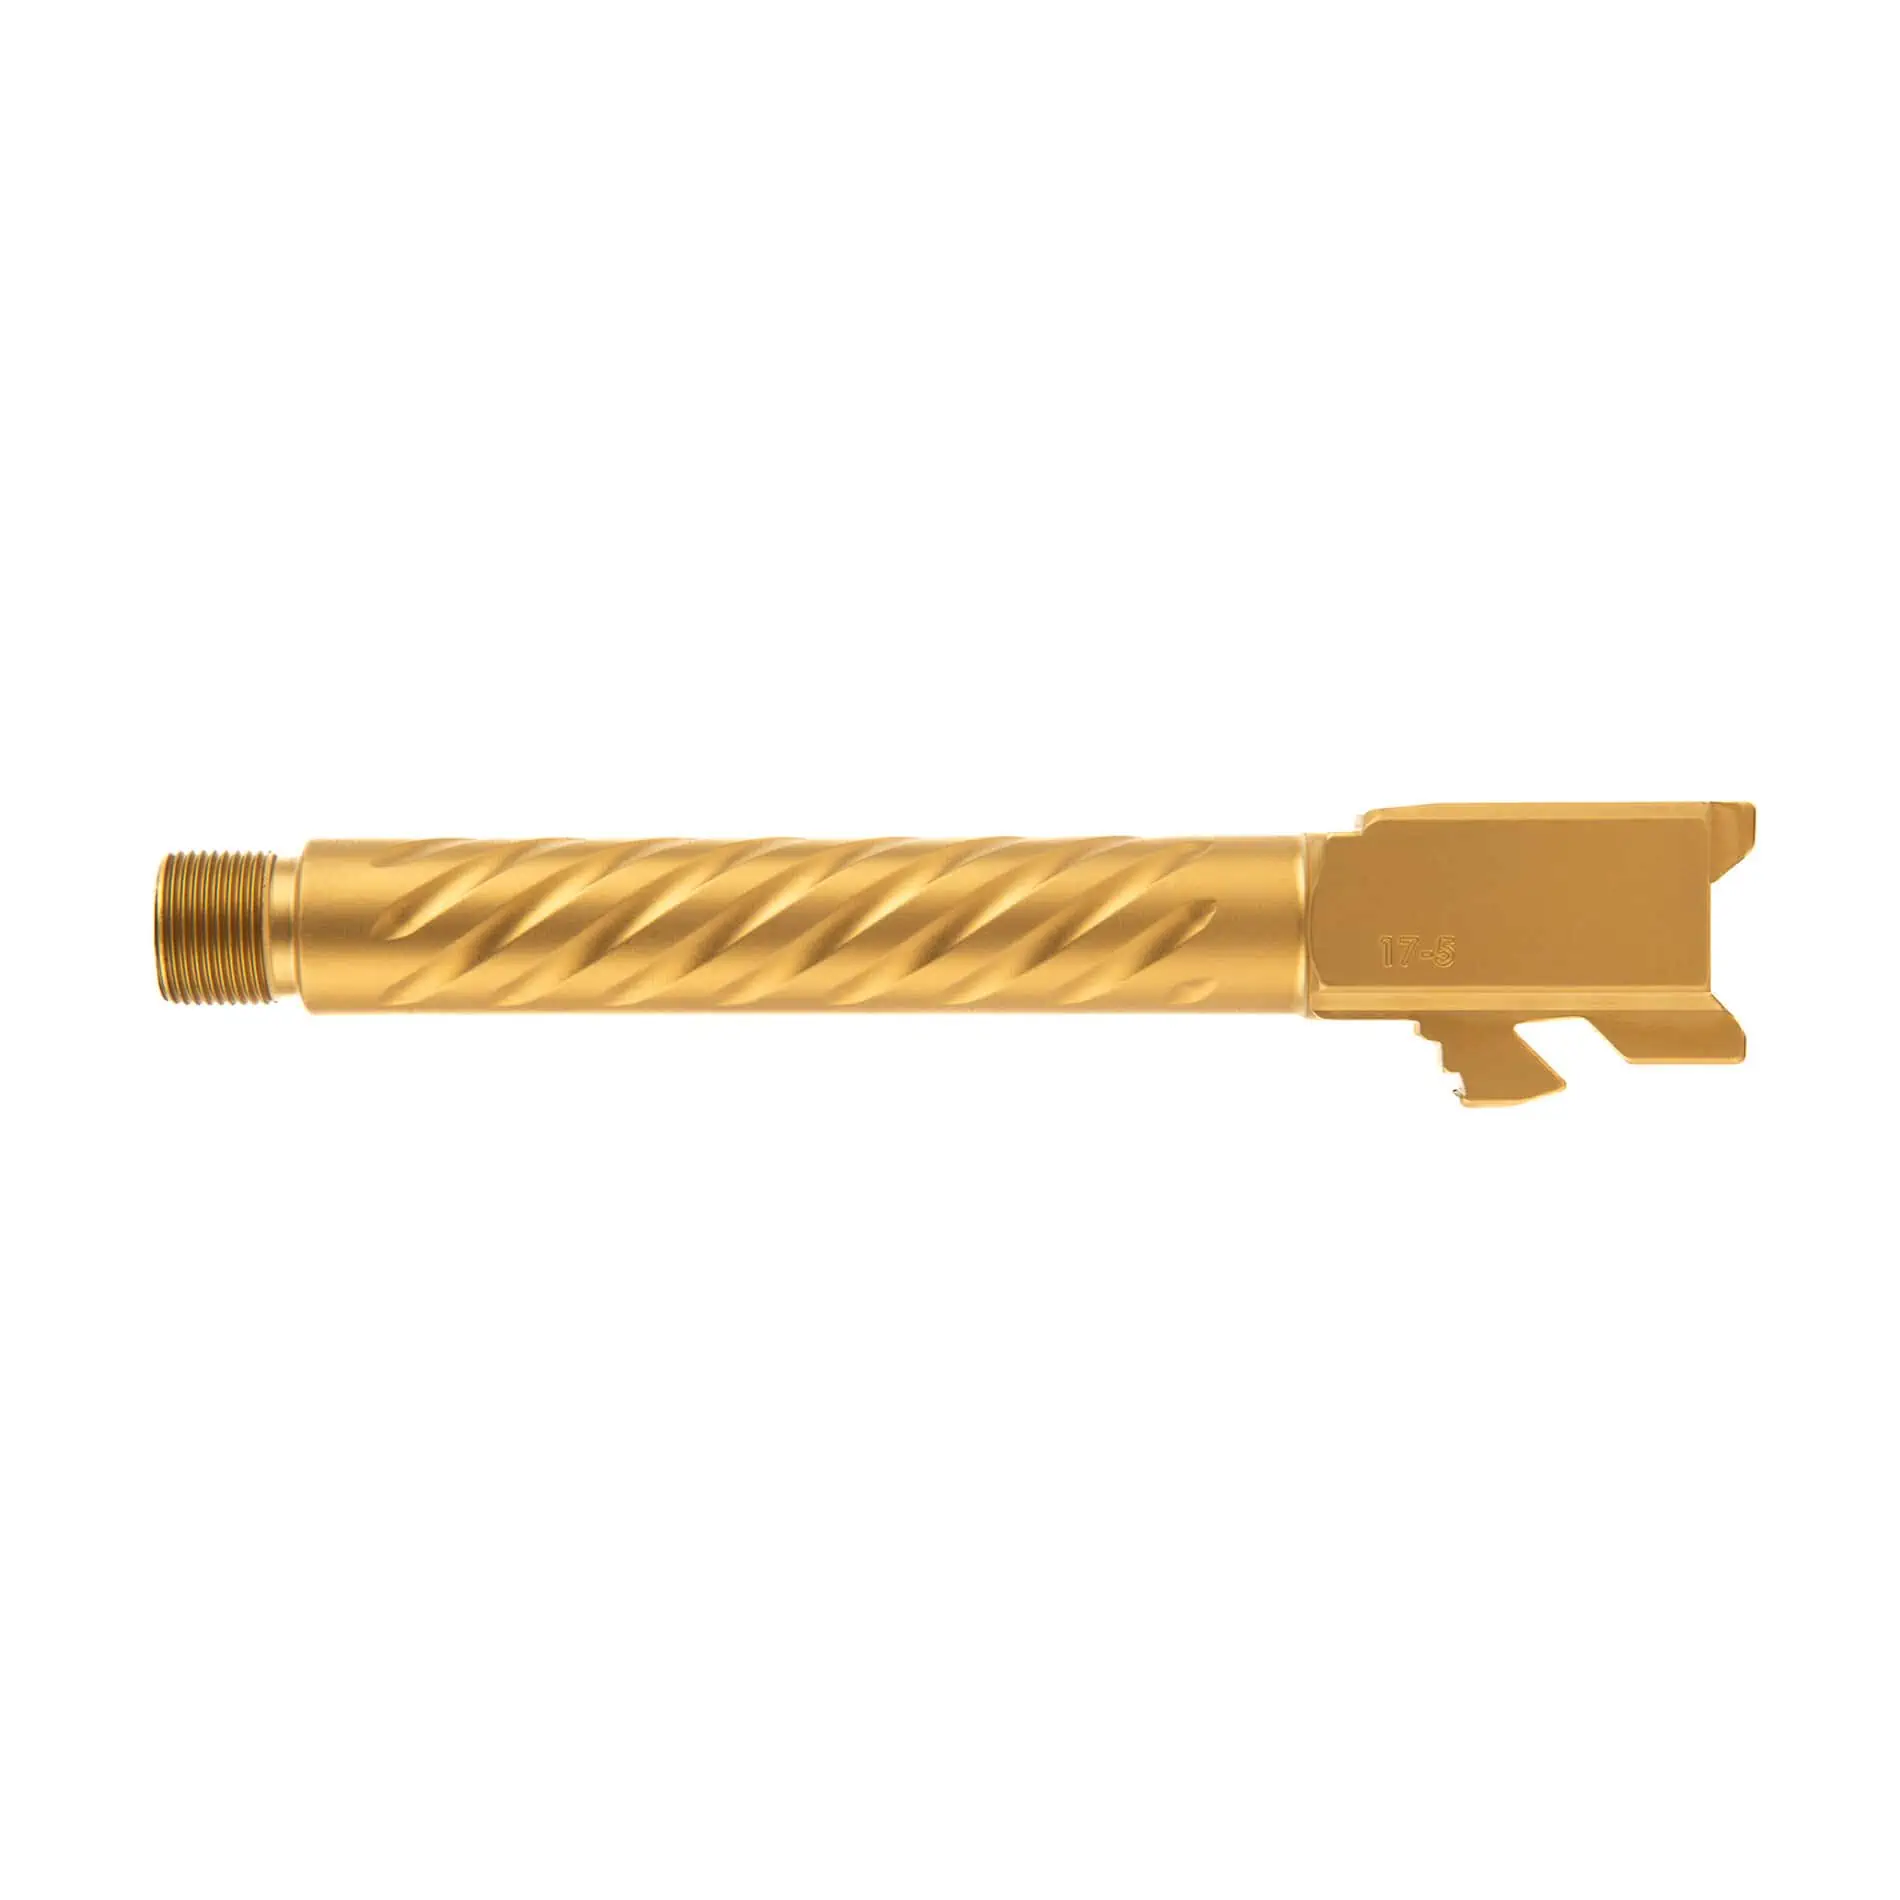 Ballistic Advantage Premium Glock 17 Gen 5 Threaded Barrel - Spiral Fluting - 1/2x28